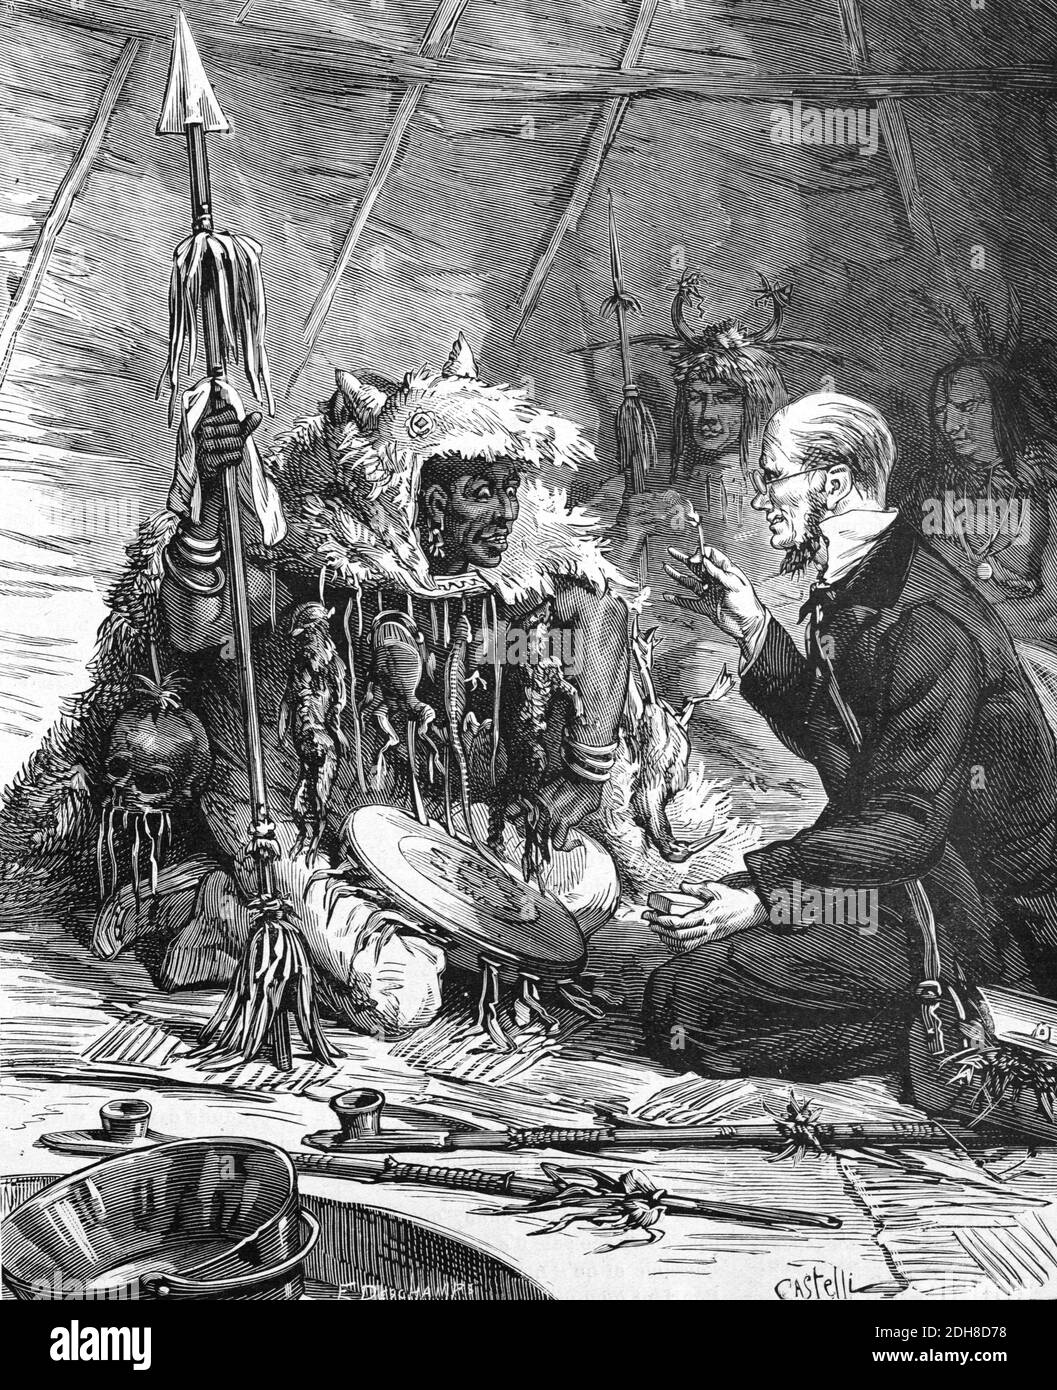 European Settler demostrando partidos con nativos americanos, gente de la primera nación o indios americanos dentro de Tipi, Tepee o Teepee en EE.UU., Estados Unidos o Estados Unidos de América (Engr 1880 Castelli) Ilustración o grabado de la vendimia Foto de stock